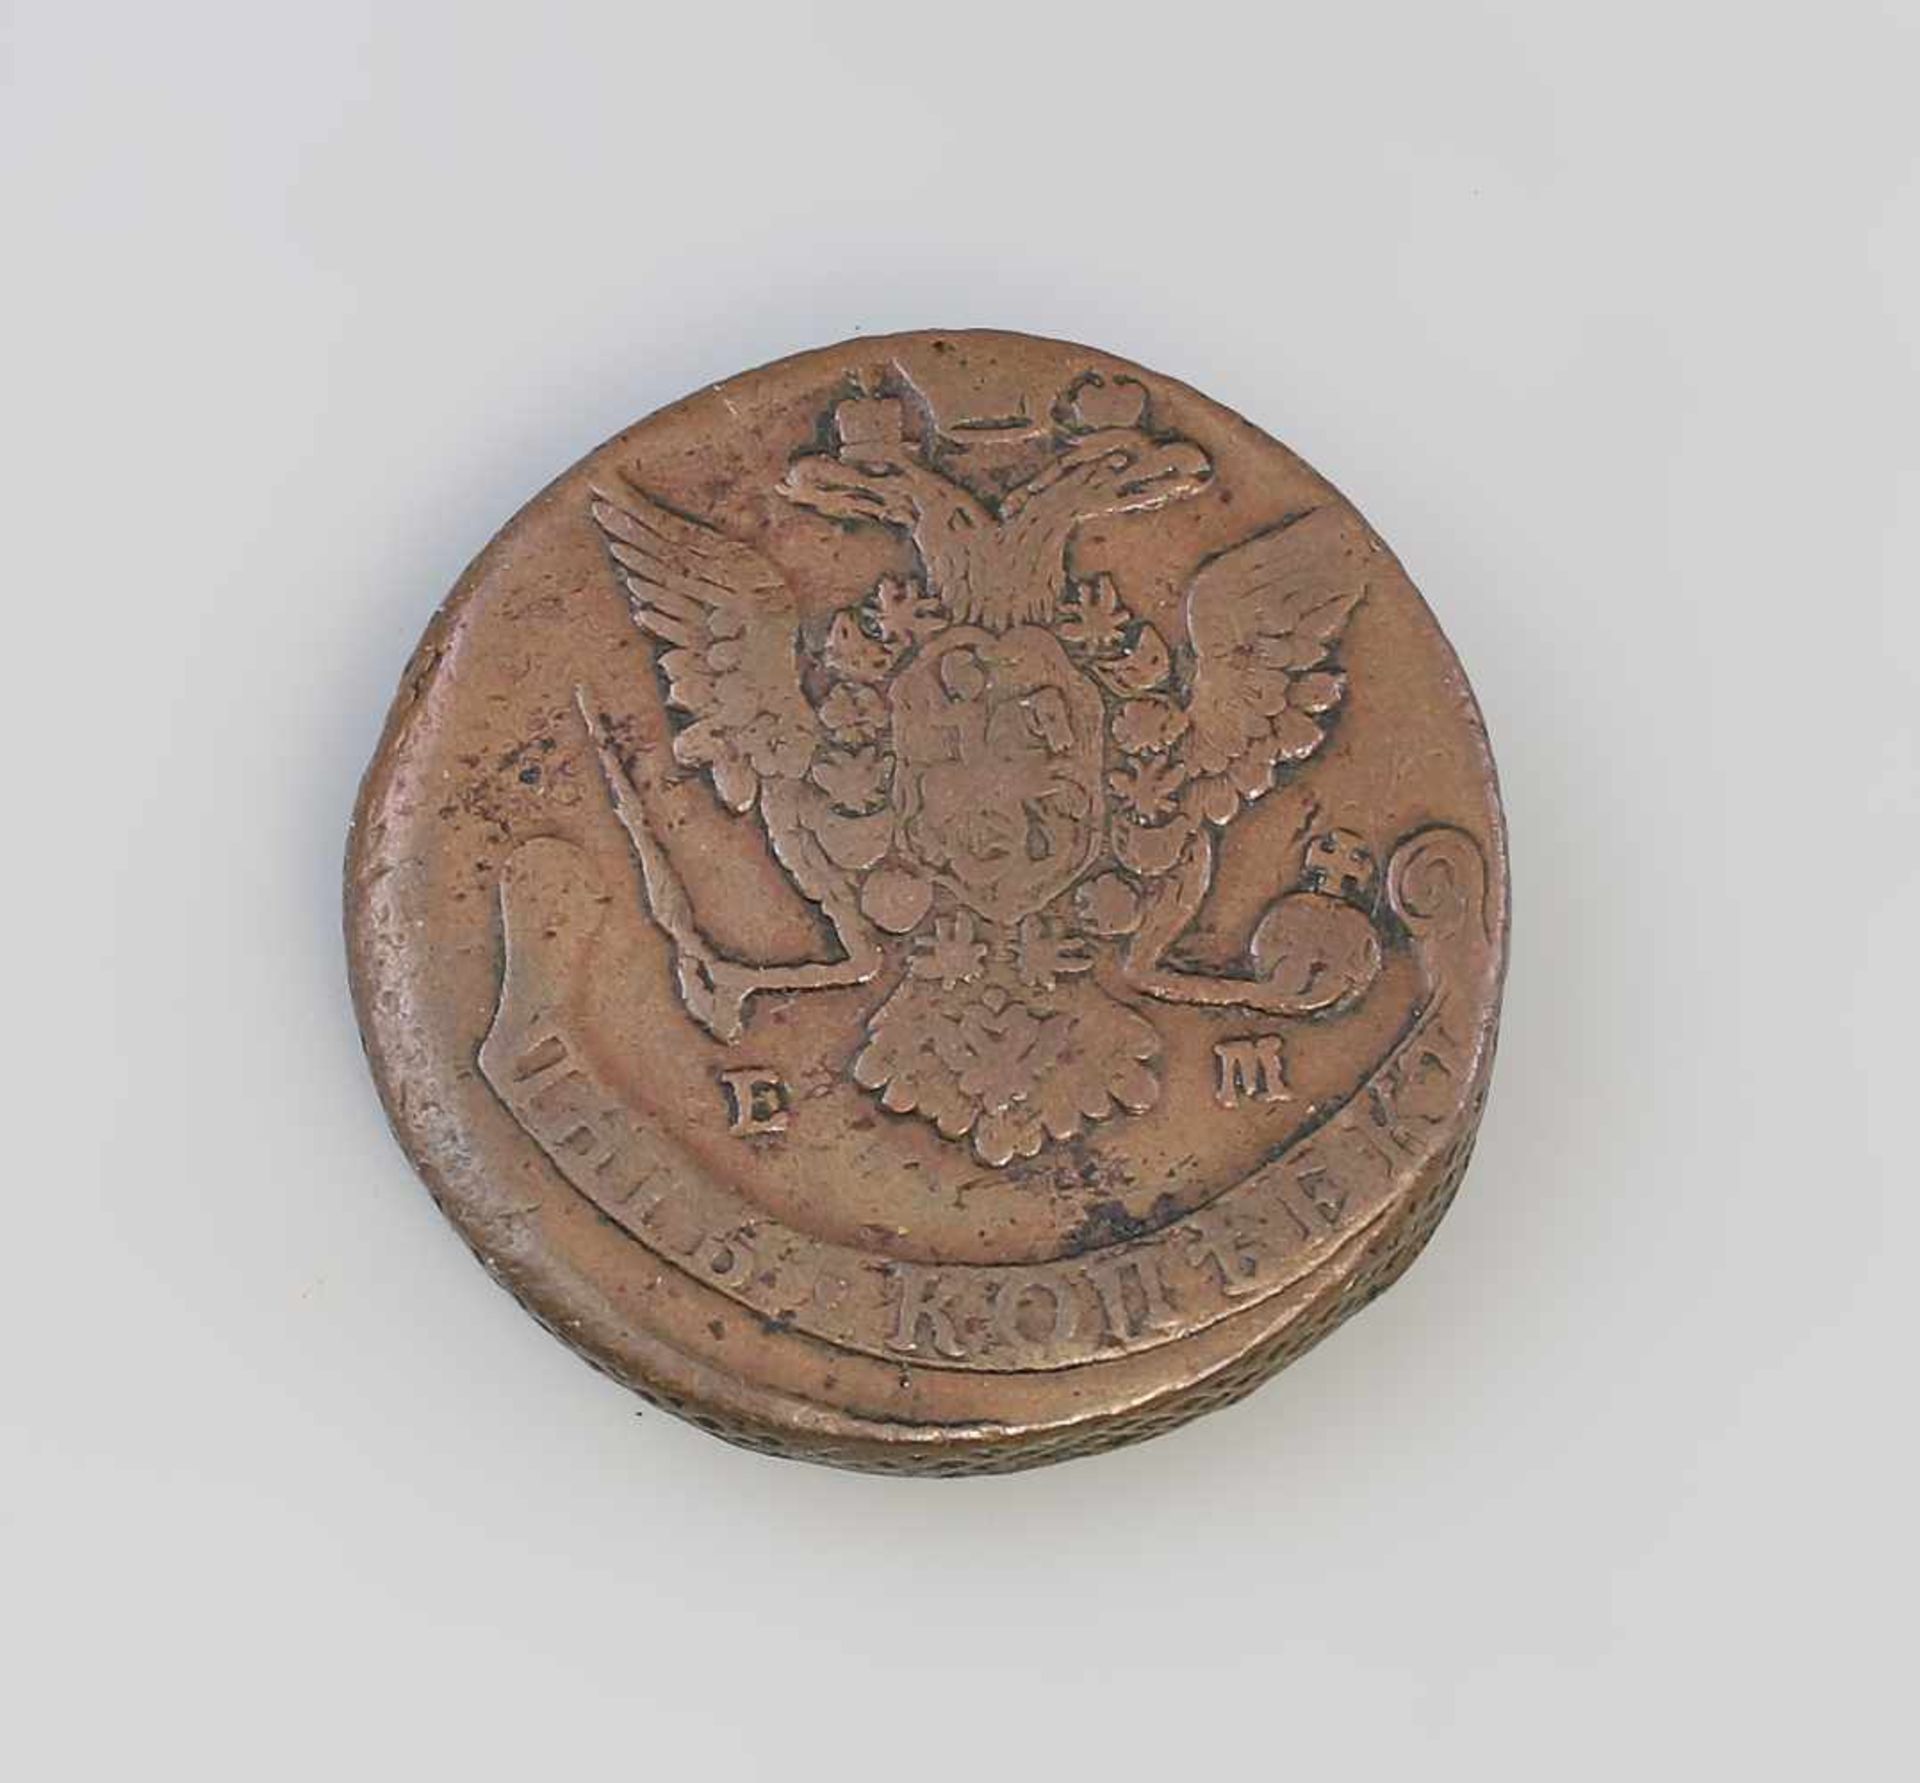 5 Kopeken Russland 1770 Katharina II (1762-1796), EM Ekaterinburg, Kupfer, 51,1 g, D 41 mm - Bild 2 aus 2